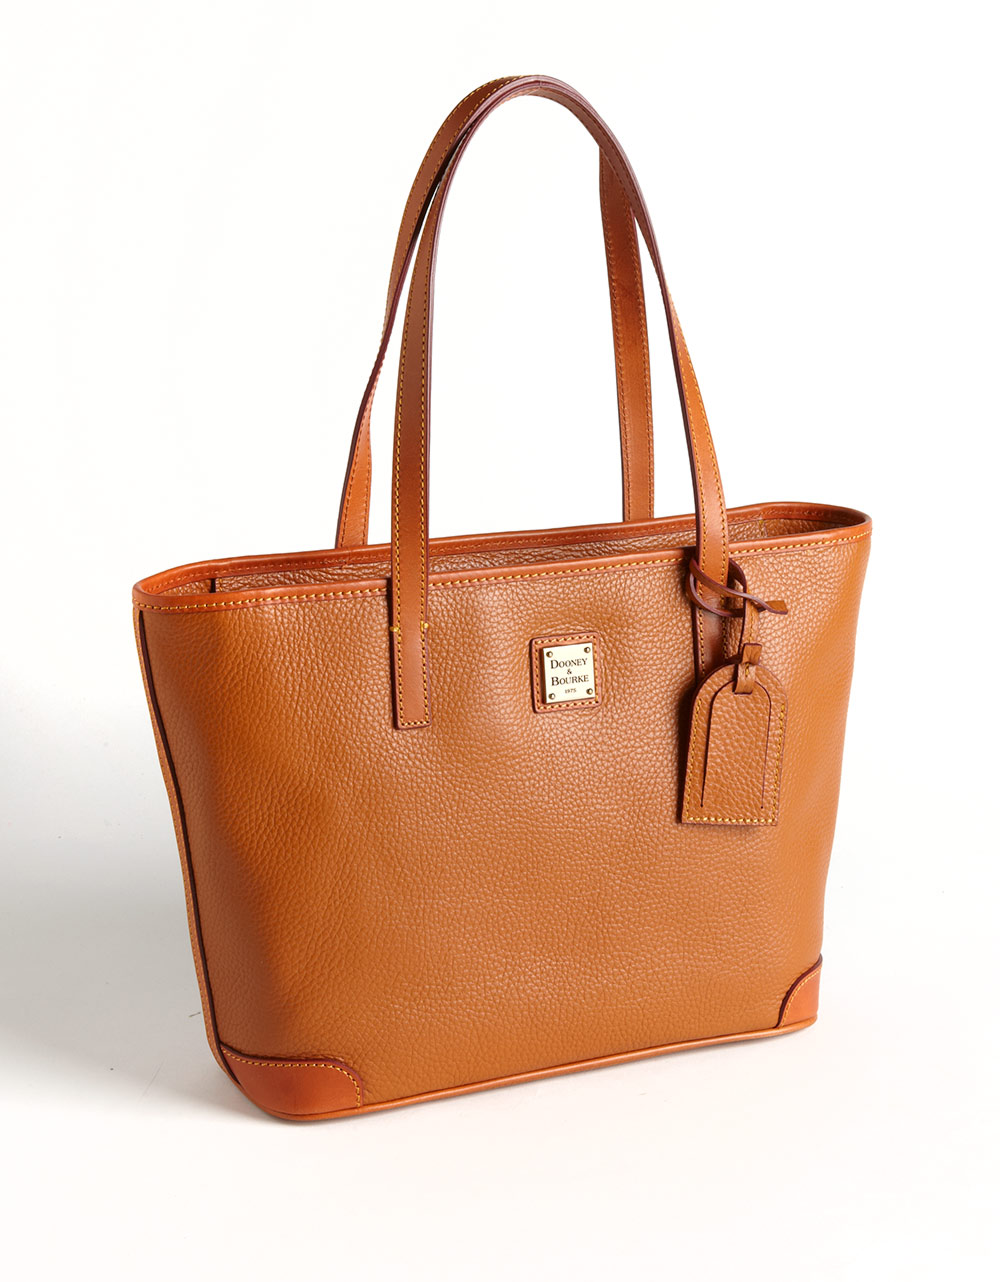 Dooney & Bourke Charleston Shopper Leather Tote Bag in (caramel) | Lyst